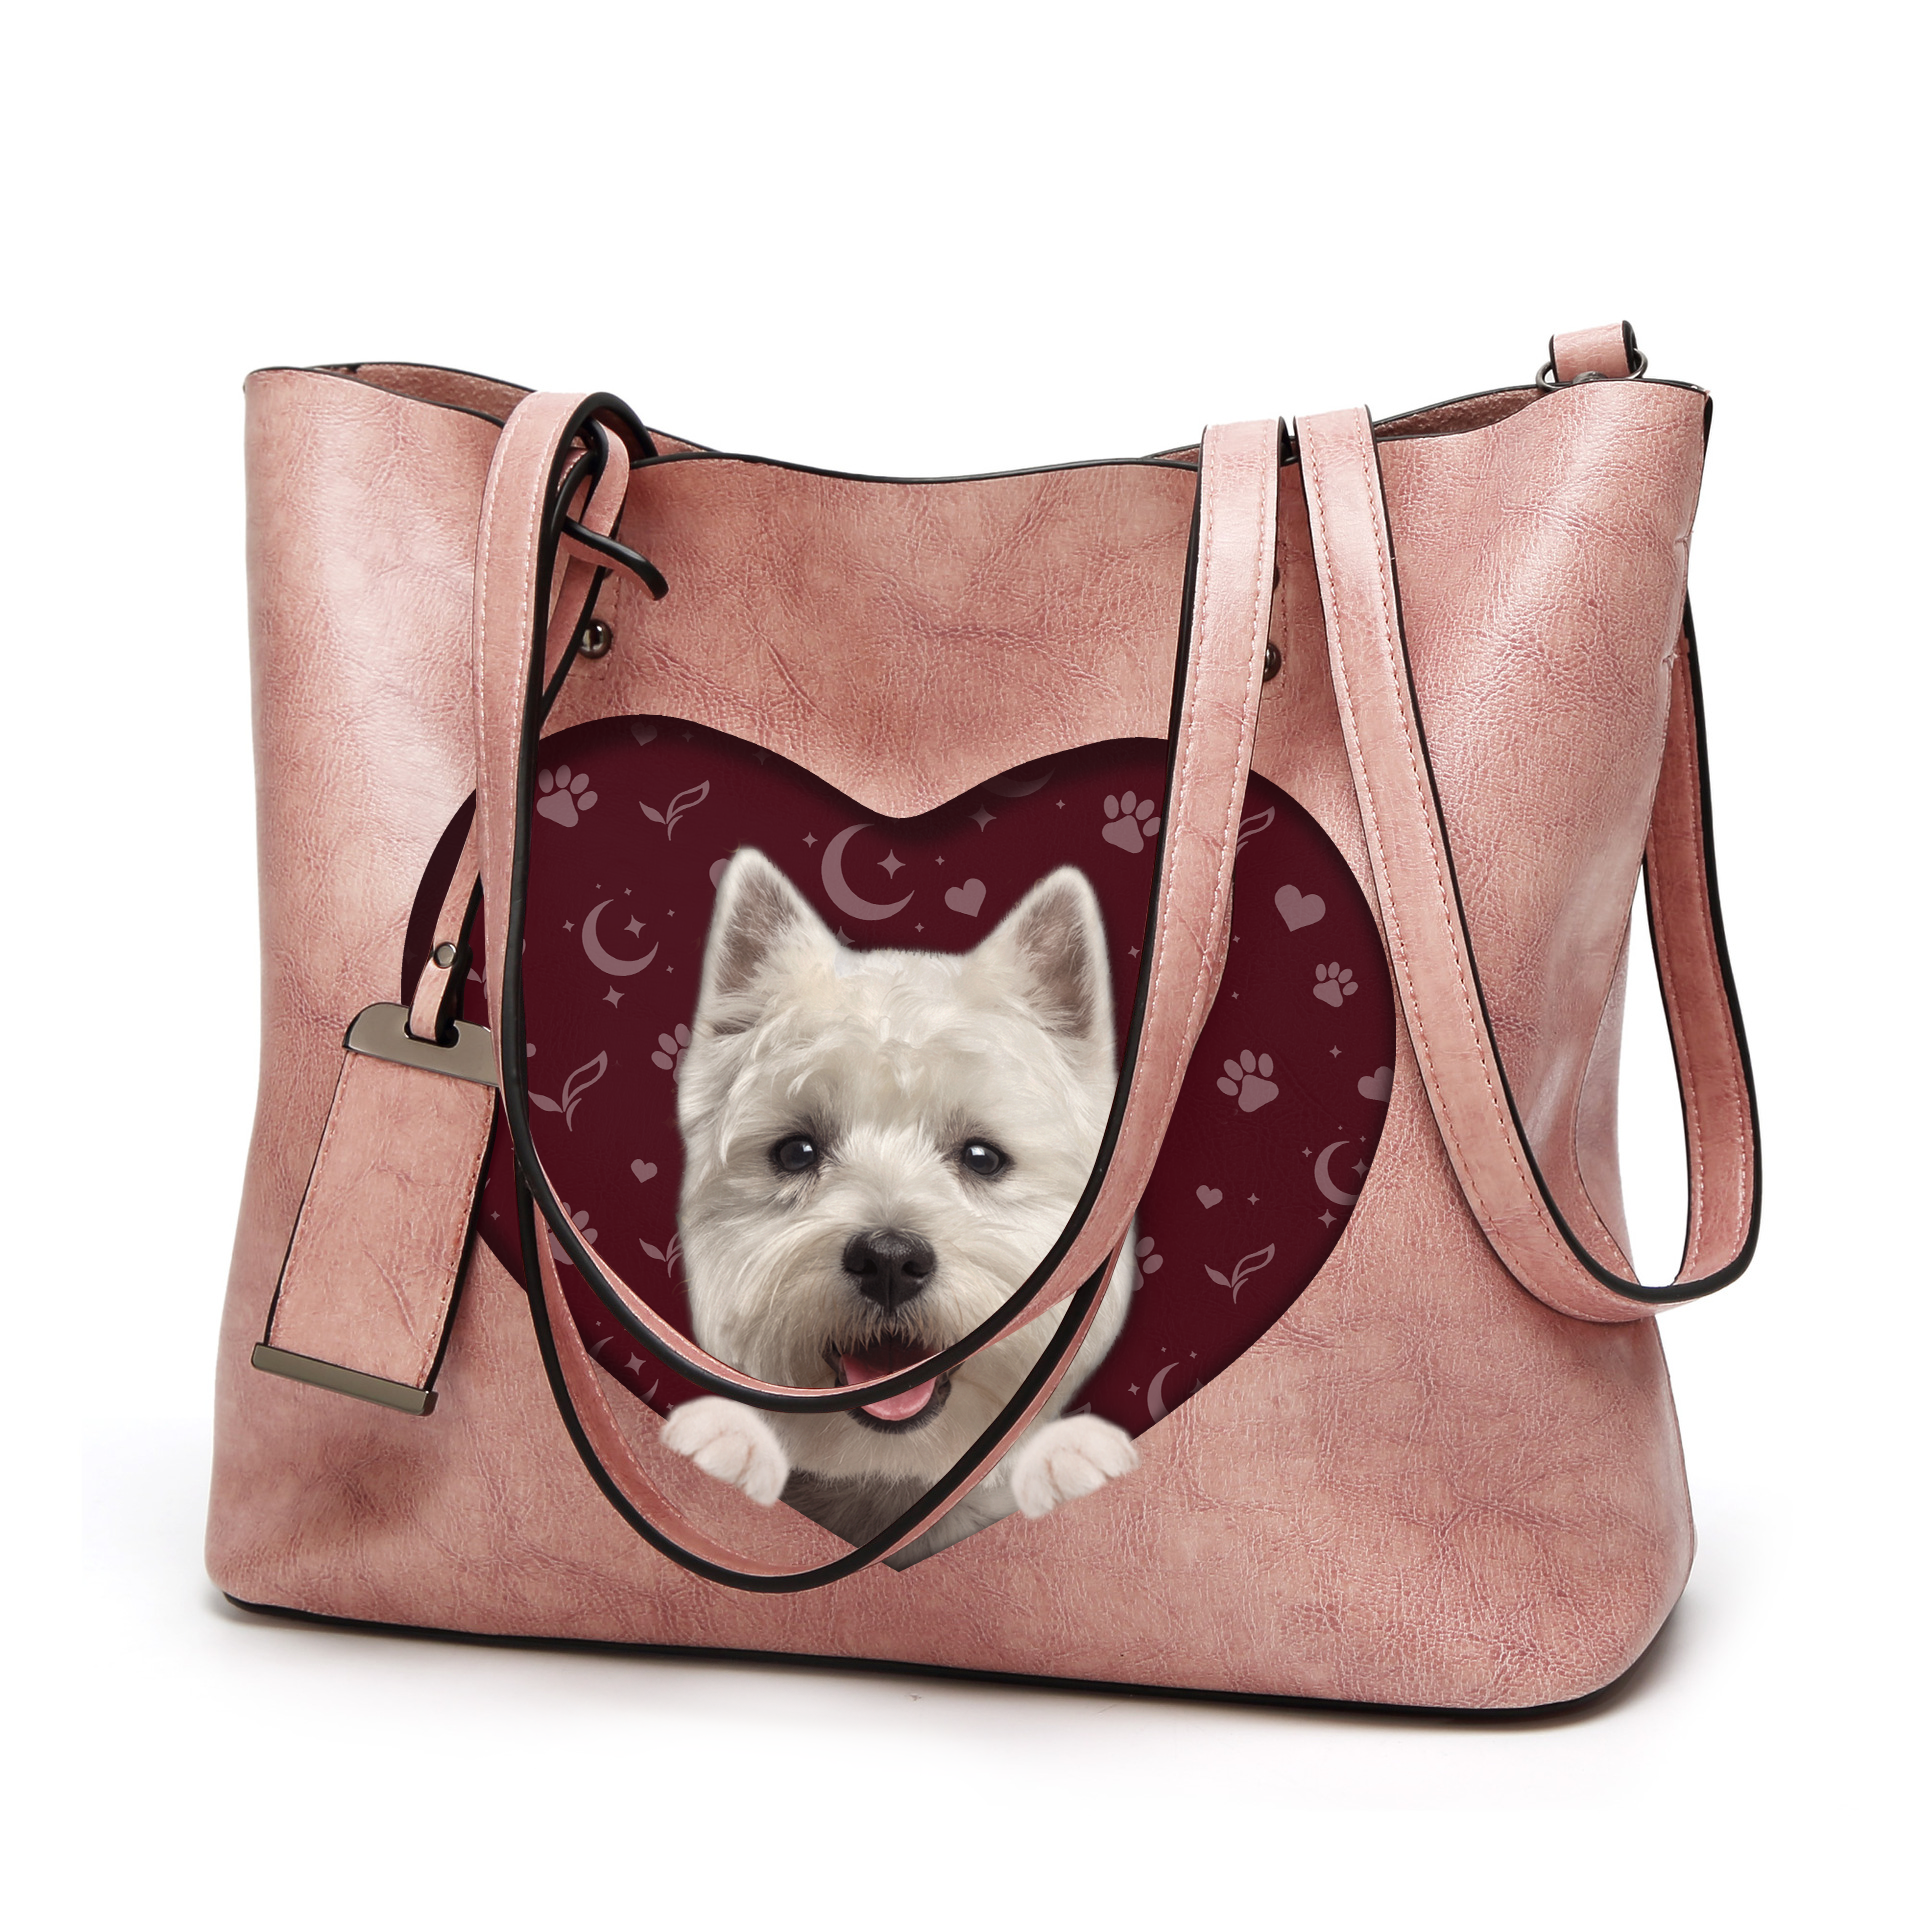 I Know I'm Cute - West Highland White Terrier Glamour Handbag V1 - 8